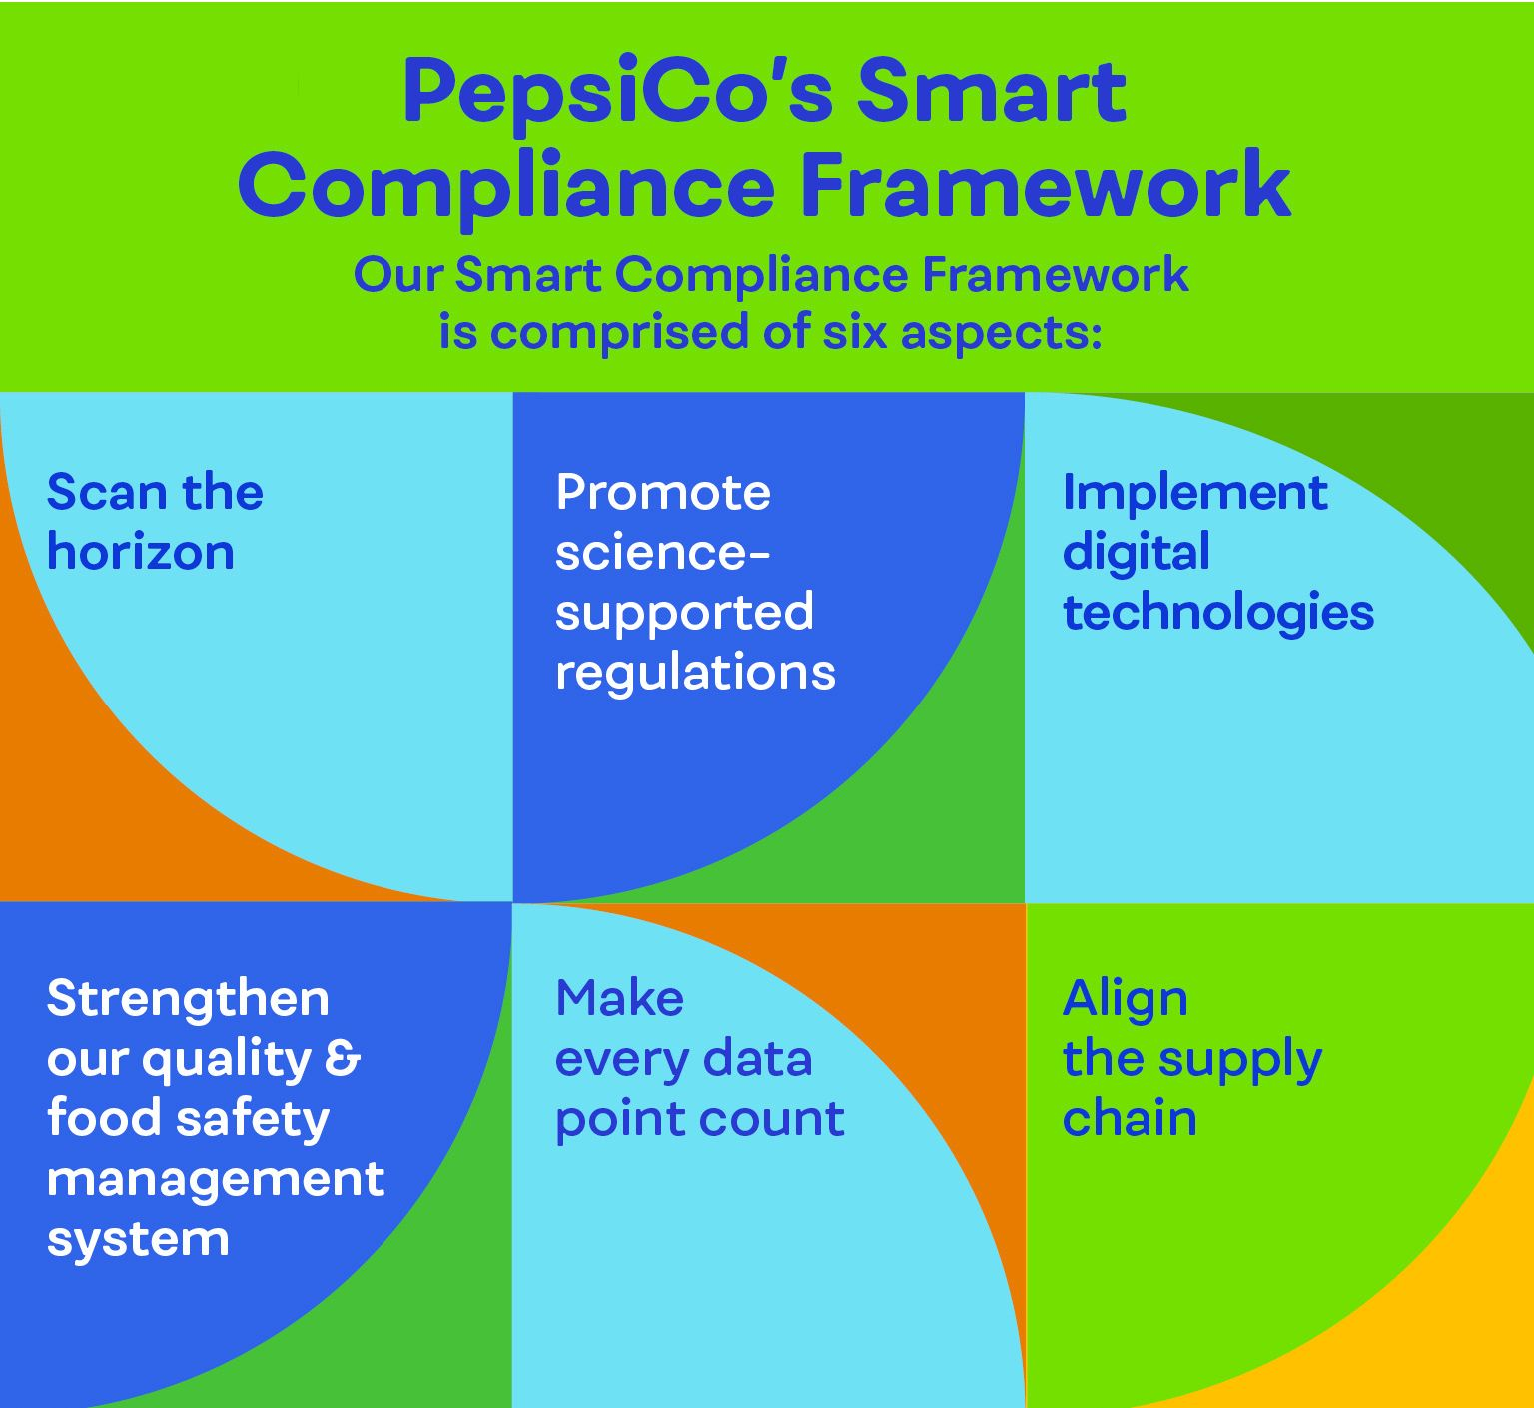 PepsiCo's Smart Compliance Framework